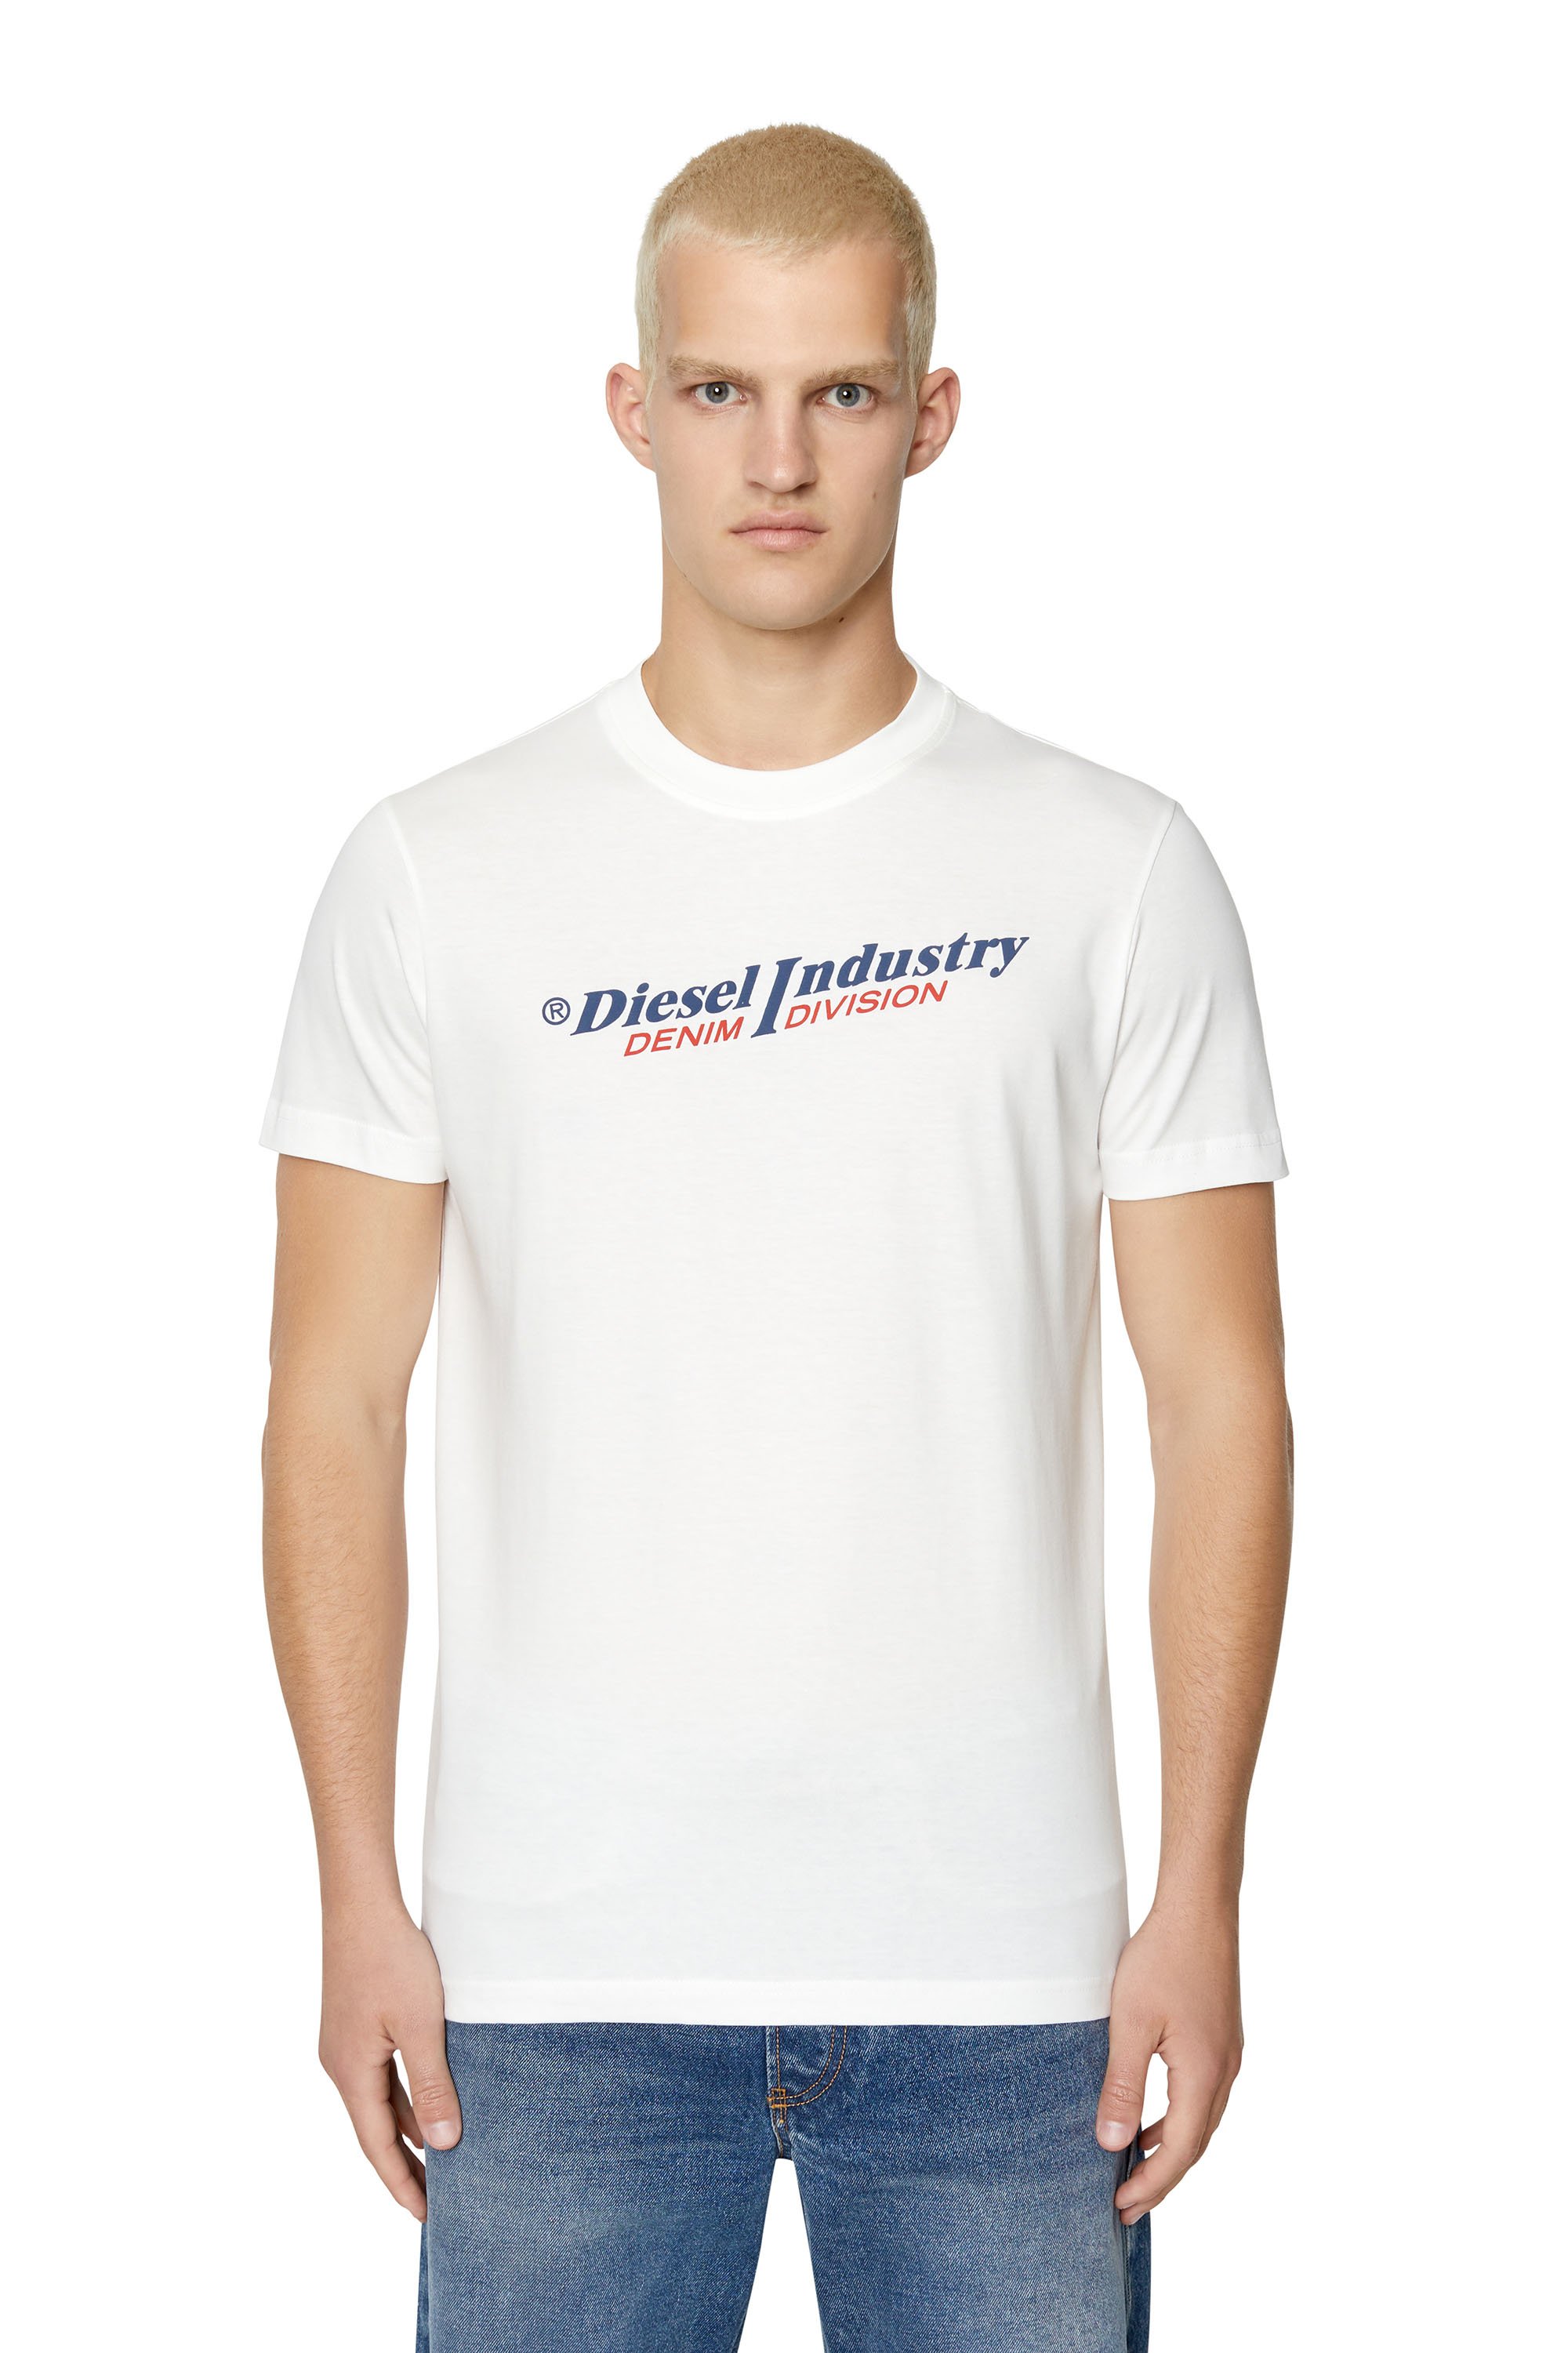 Men's T-Shirt Sale: Solid color, printed t-shirts | Diesel